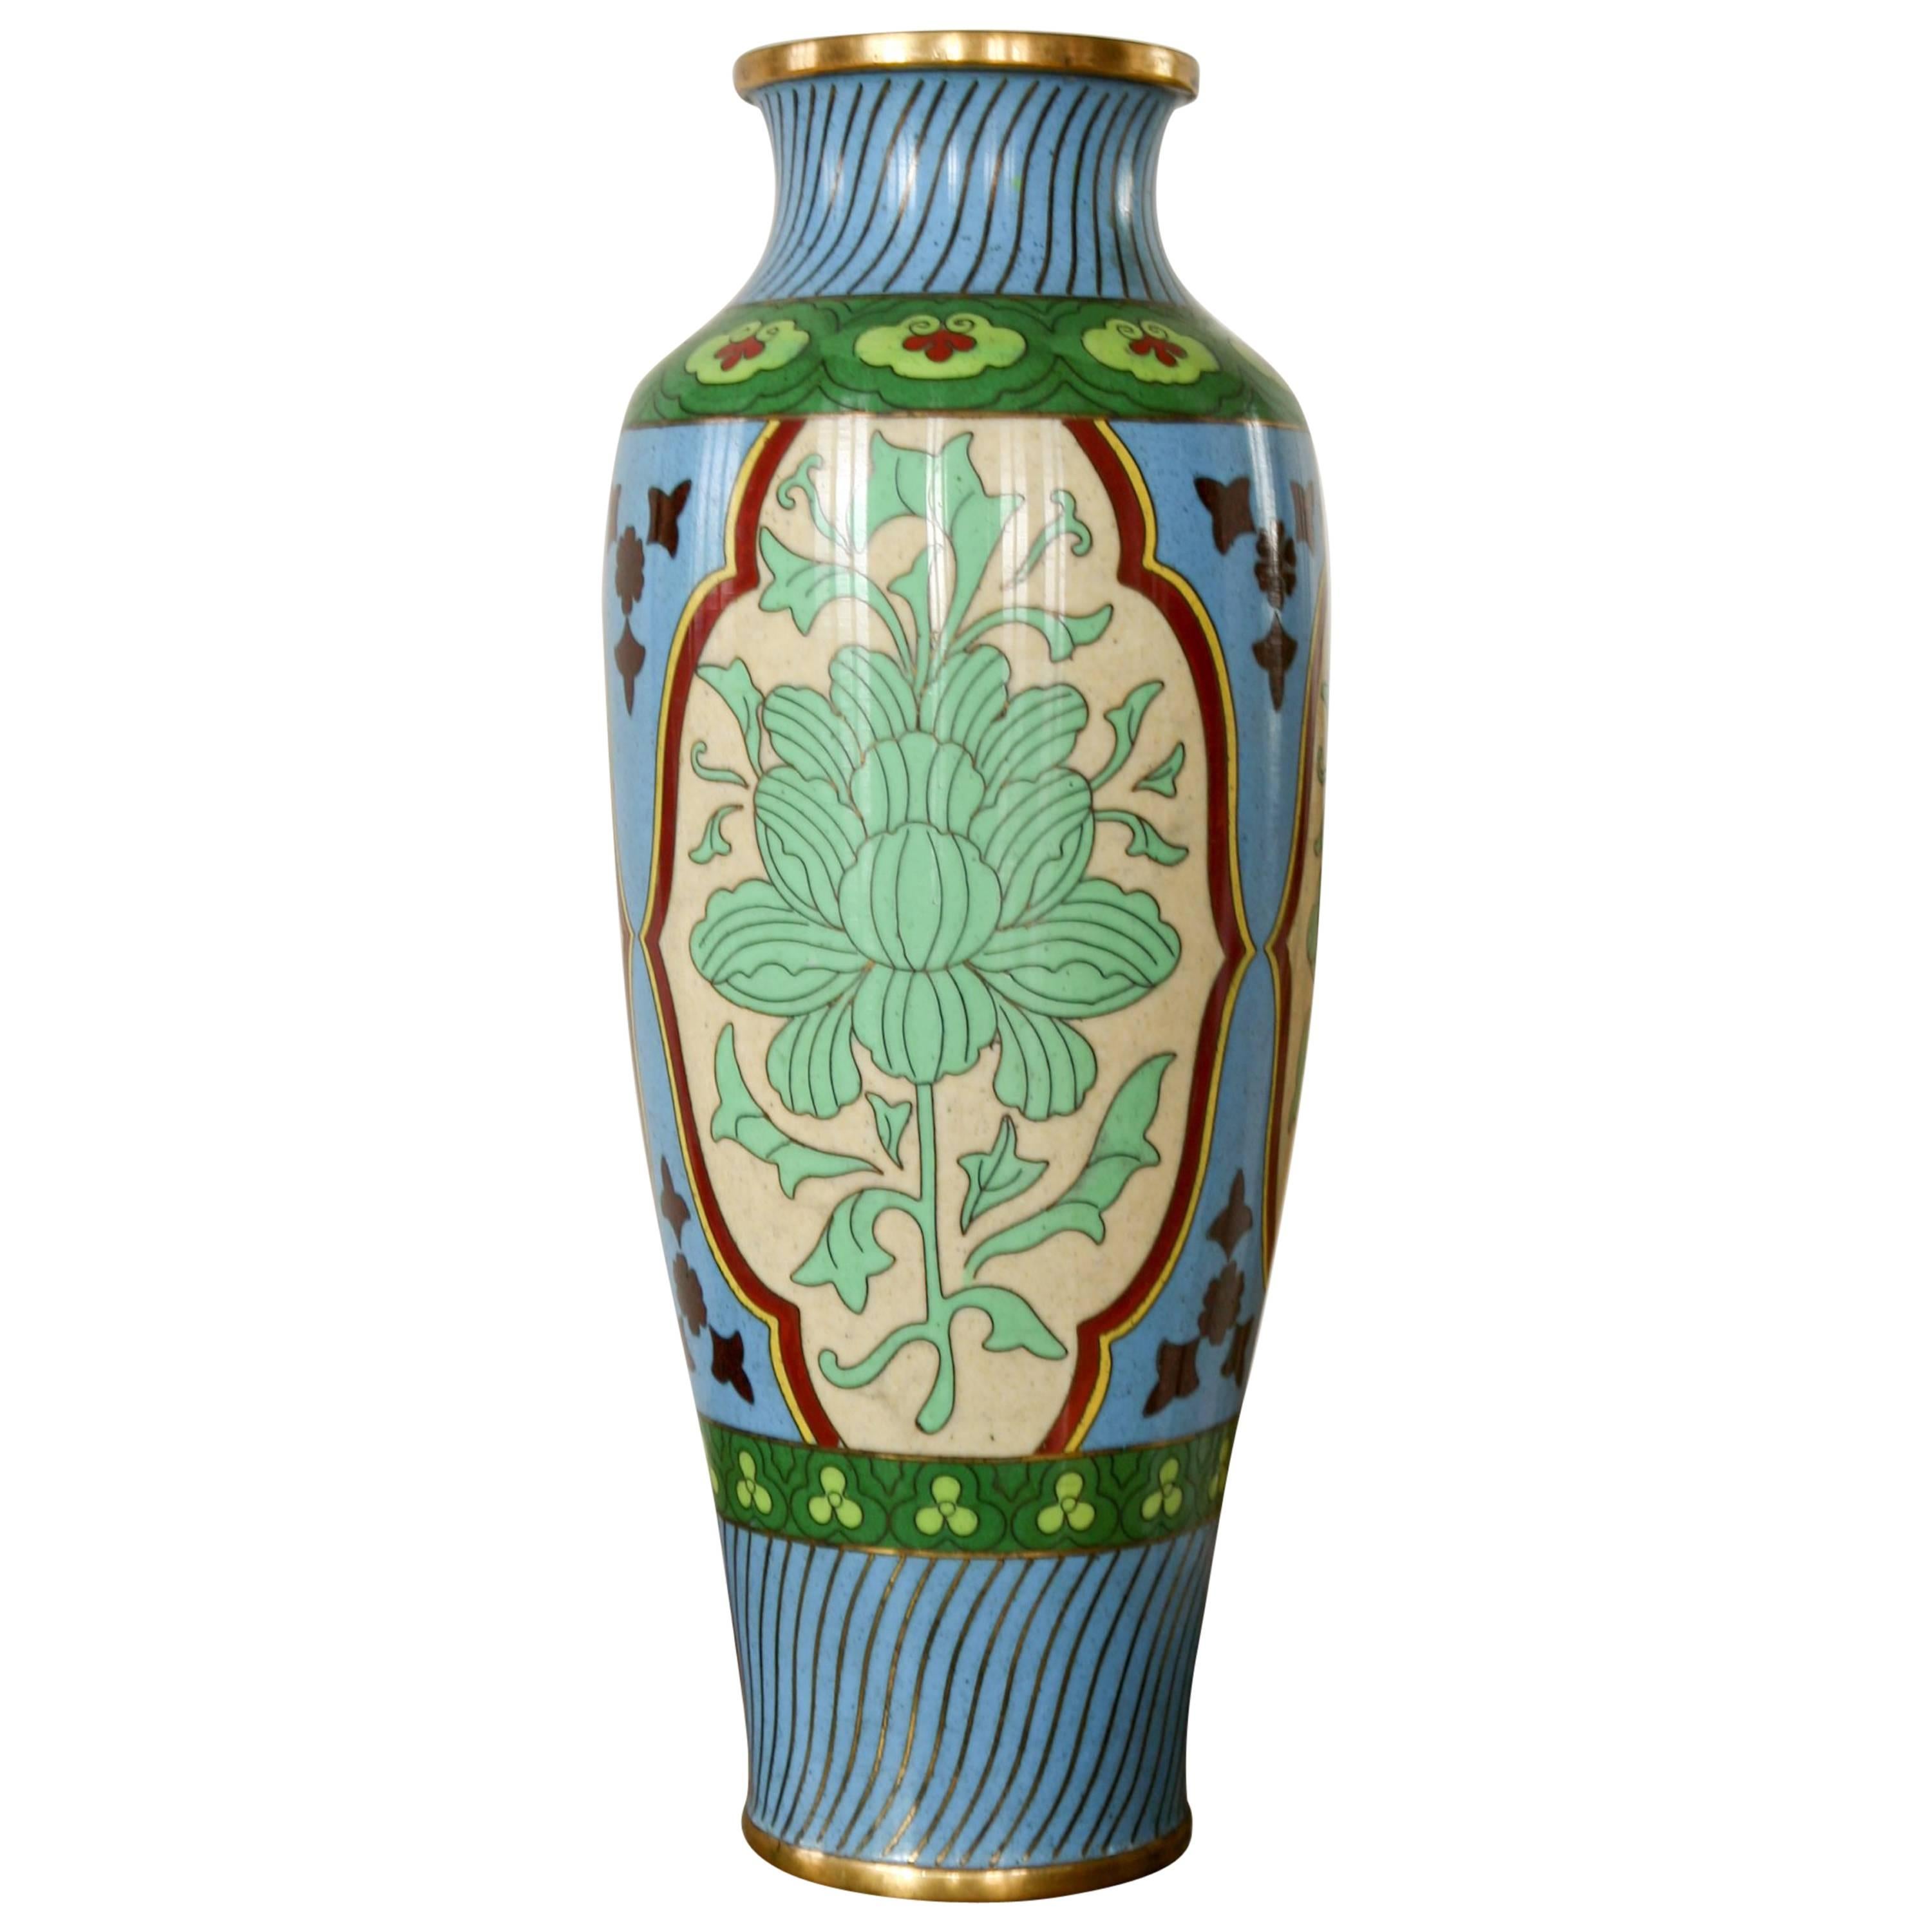 Vase aus Cloisonné-Emaille aus dem 19. Jahrhundert, Frankreich